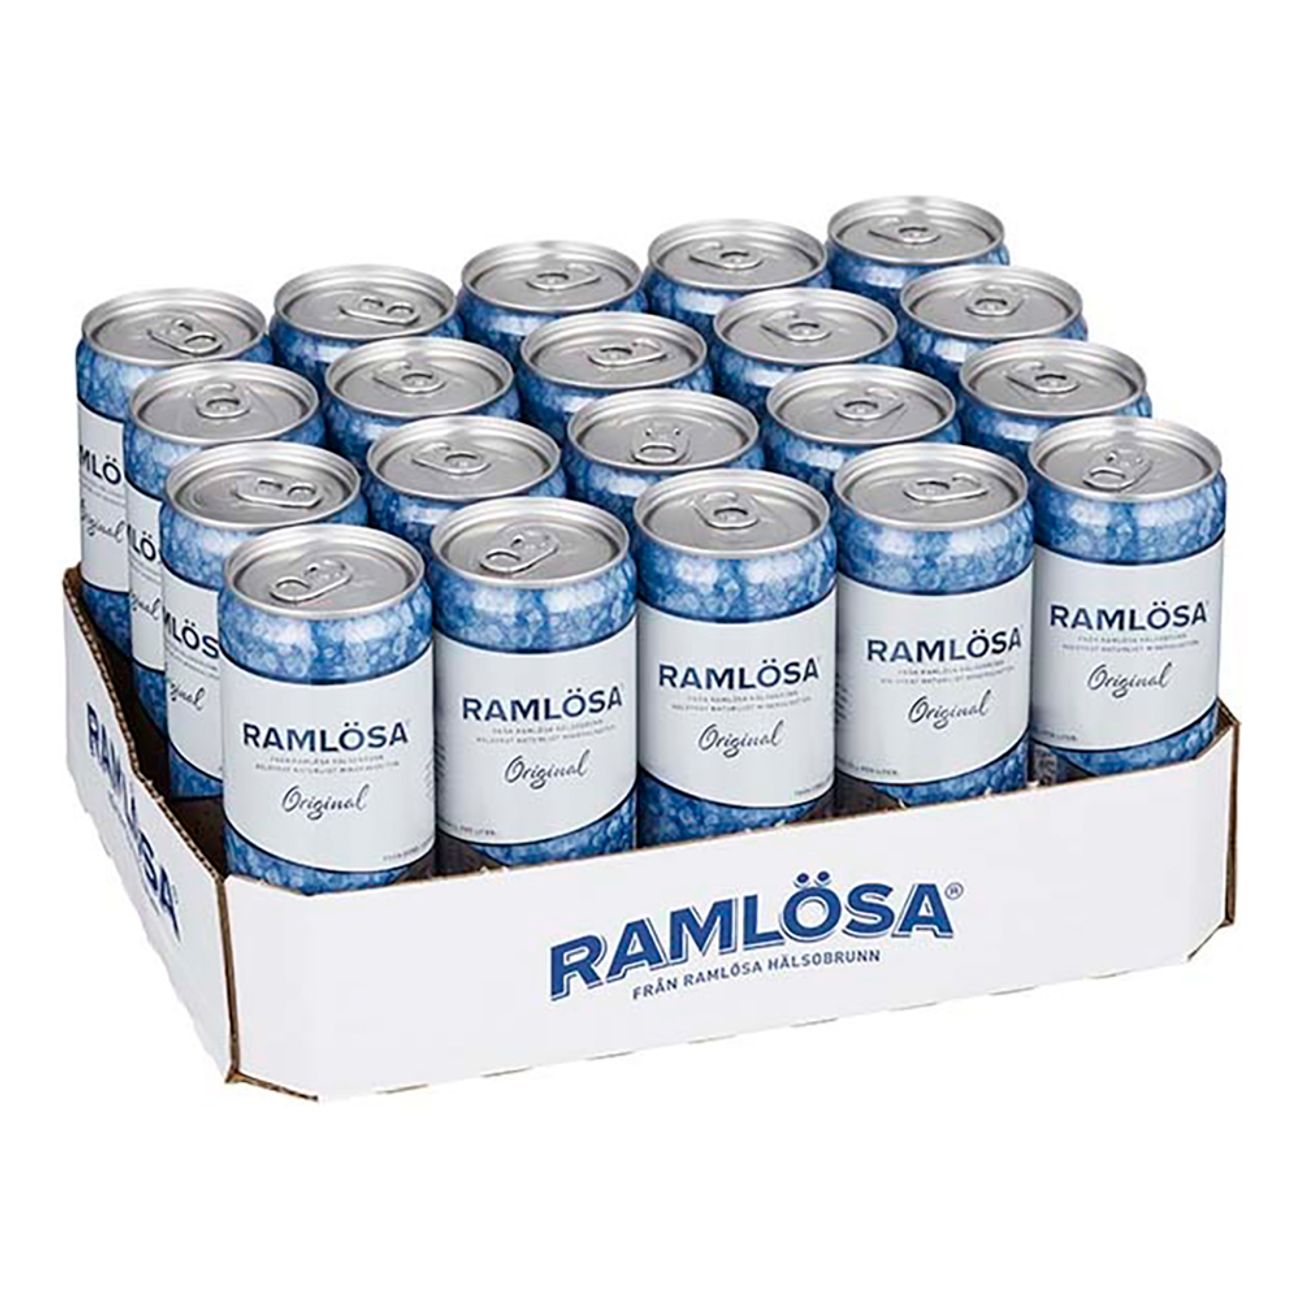 ramlosa-original-74917-2